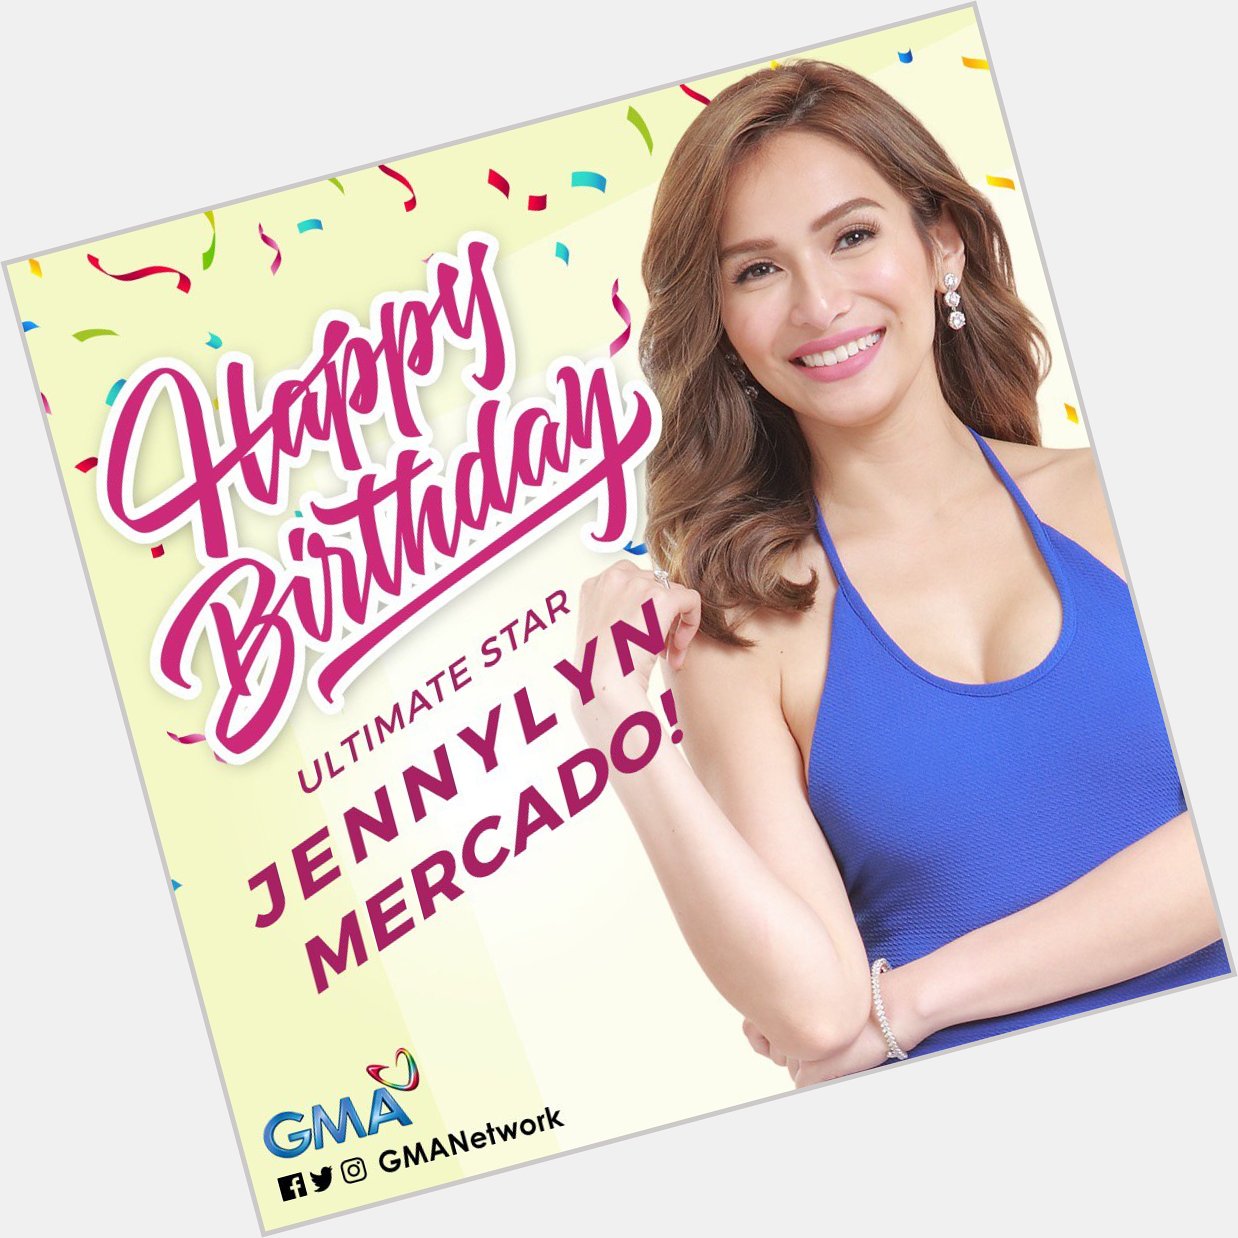 Happy Birthday to the ever beautiful Kapuso ultimate star, Jennylyn Mercado! 